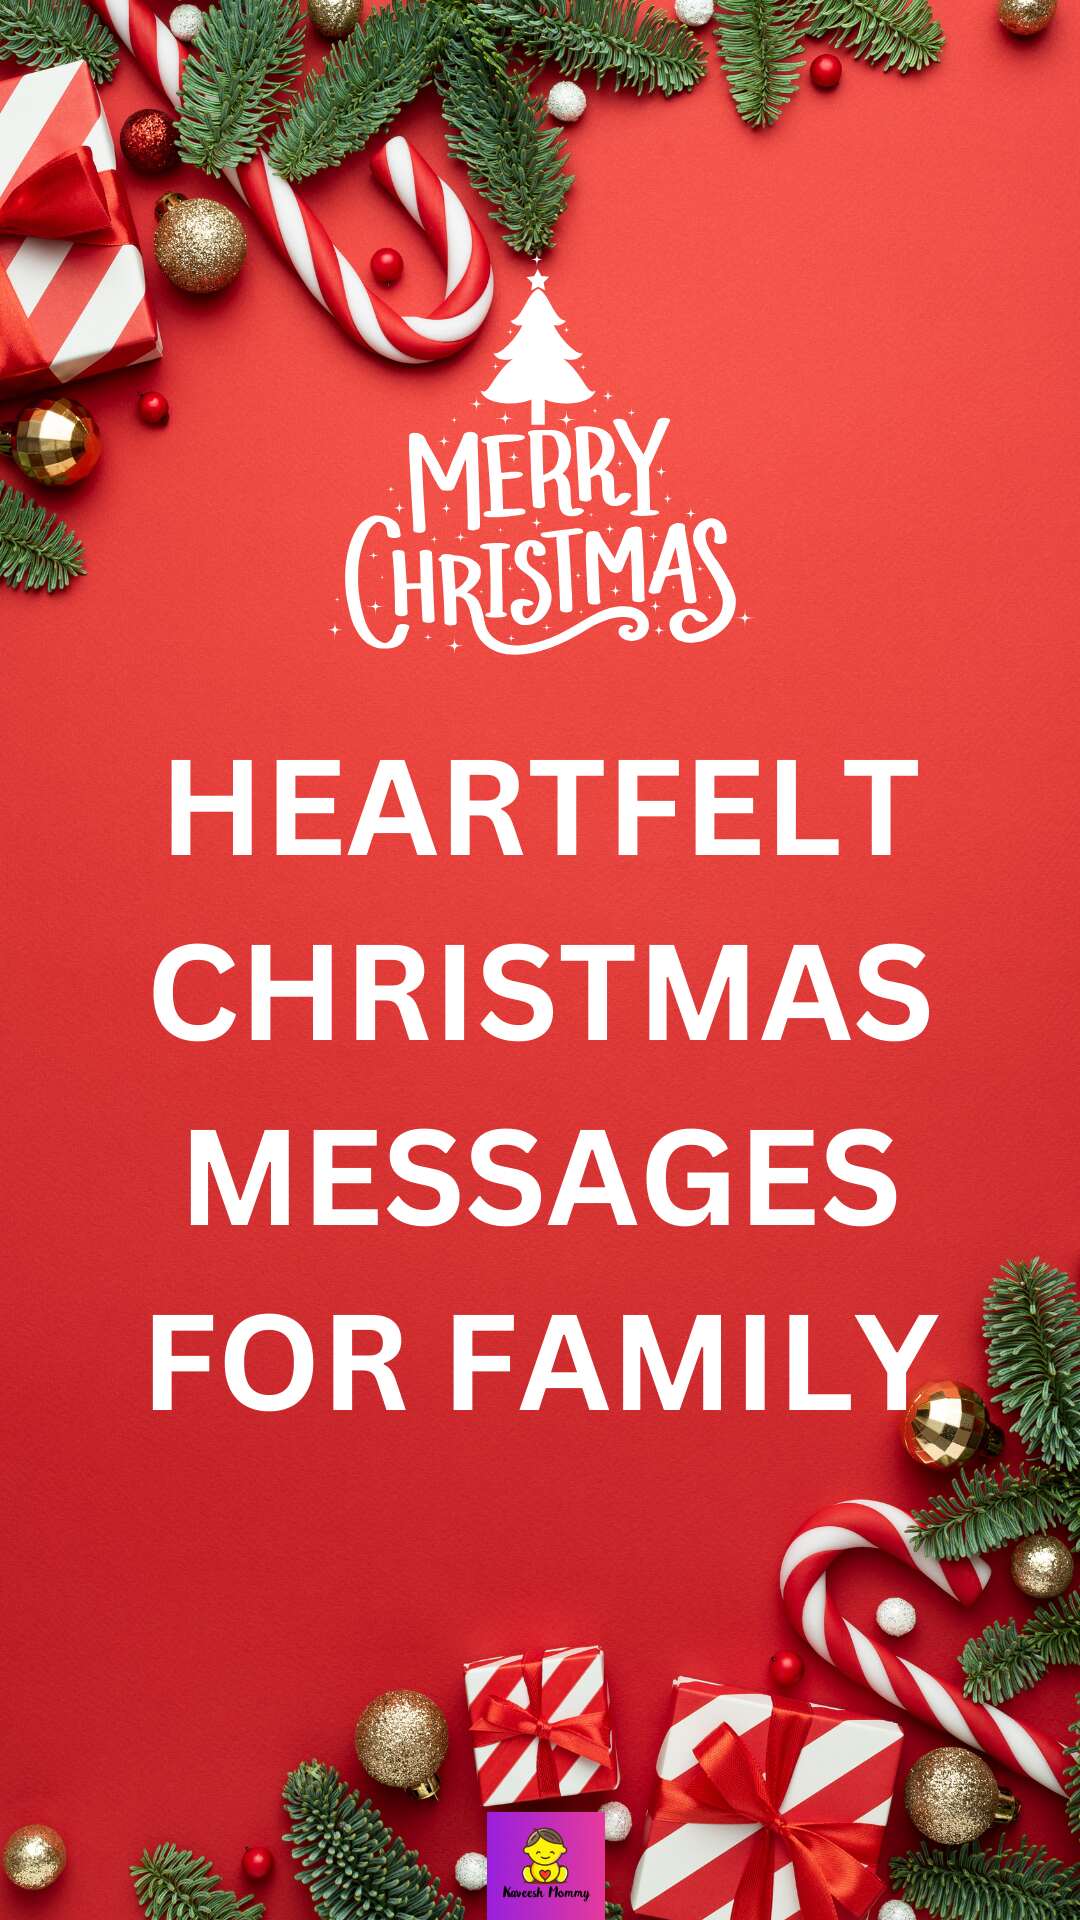 List of Heartfelt Christmas Messages for Family